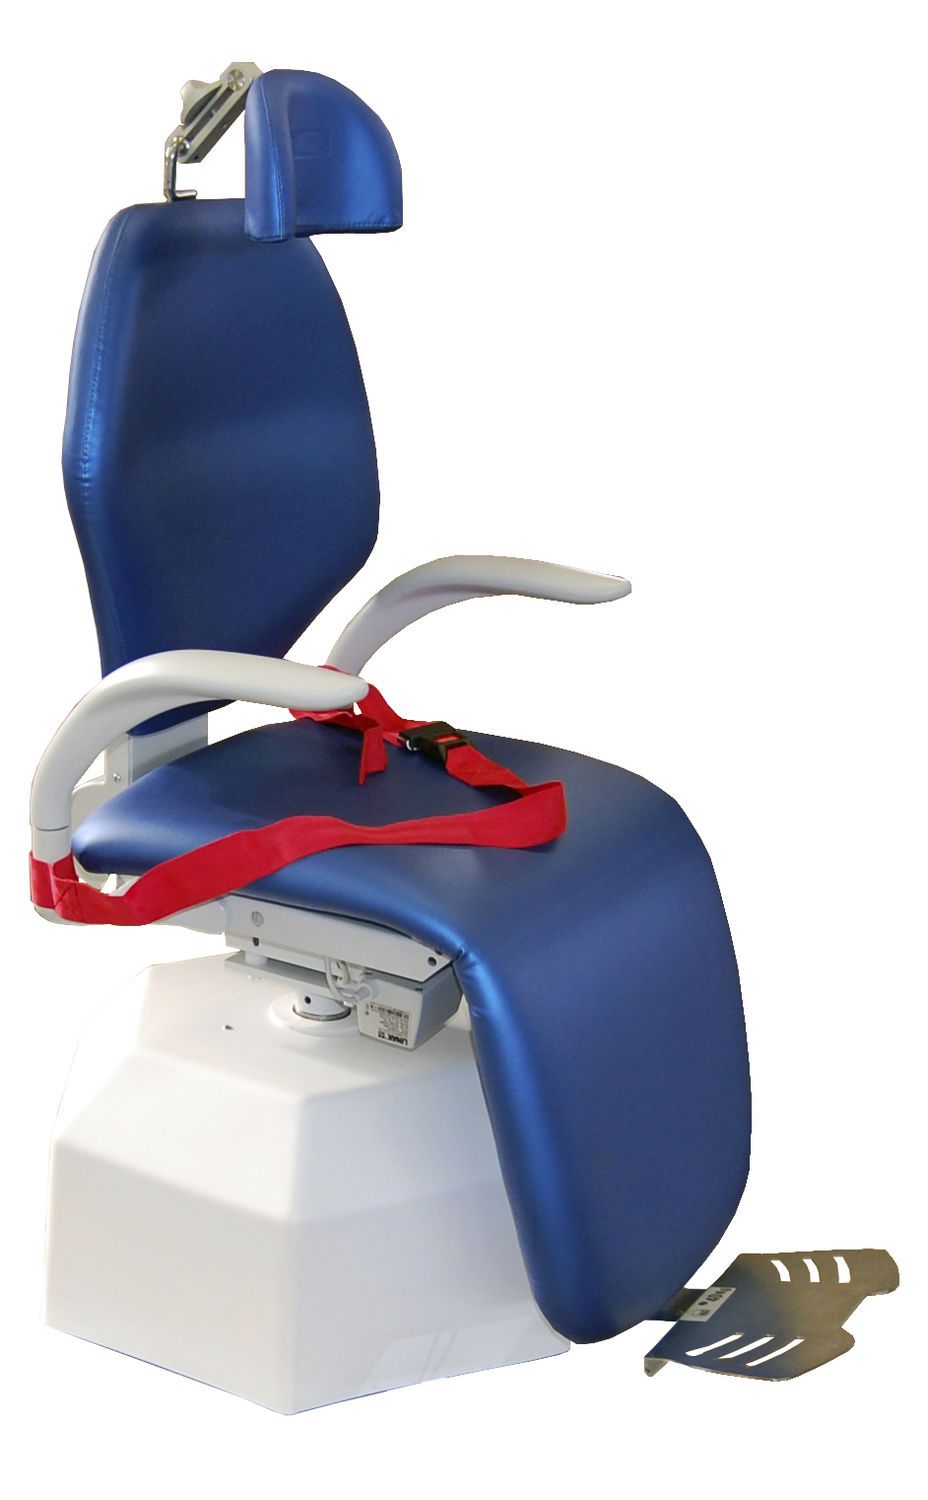 Rotary chair for vestibular testing RCS ED900 EUROCLINIC